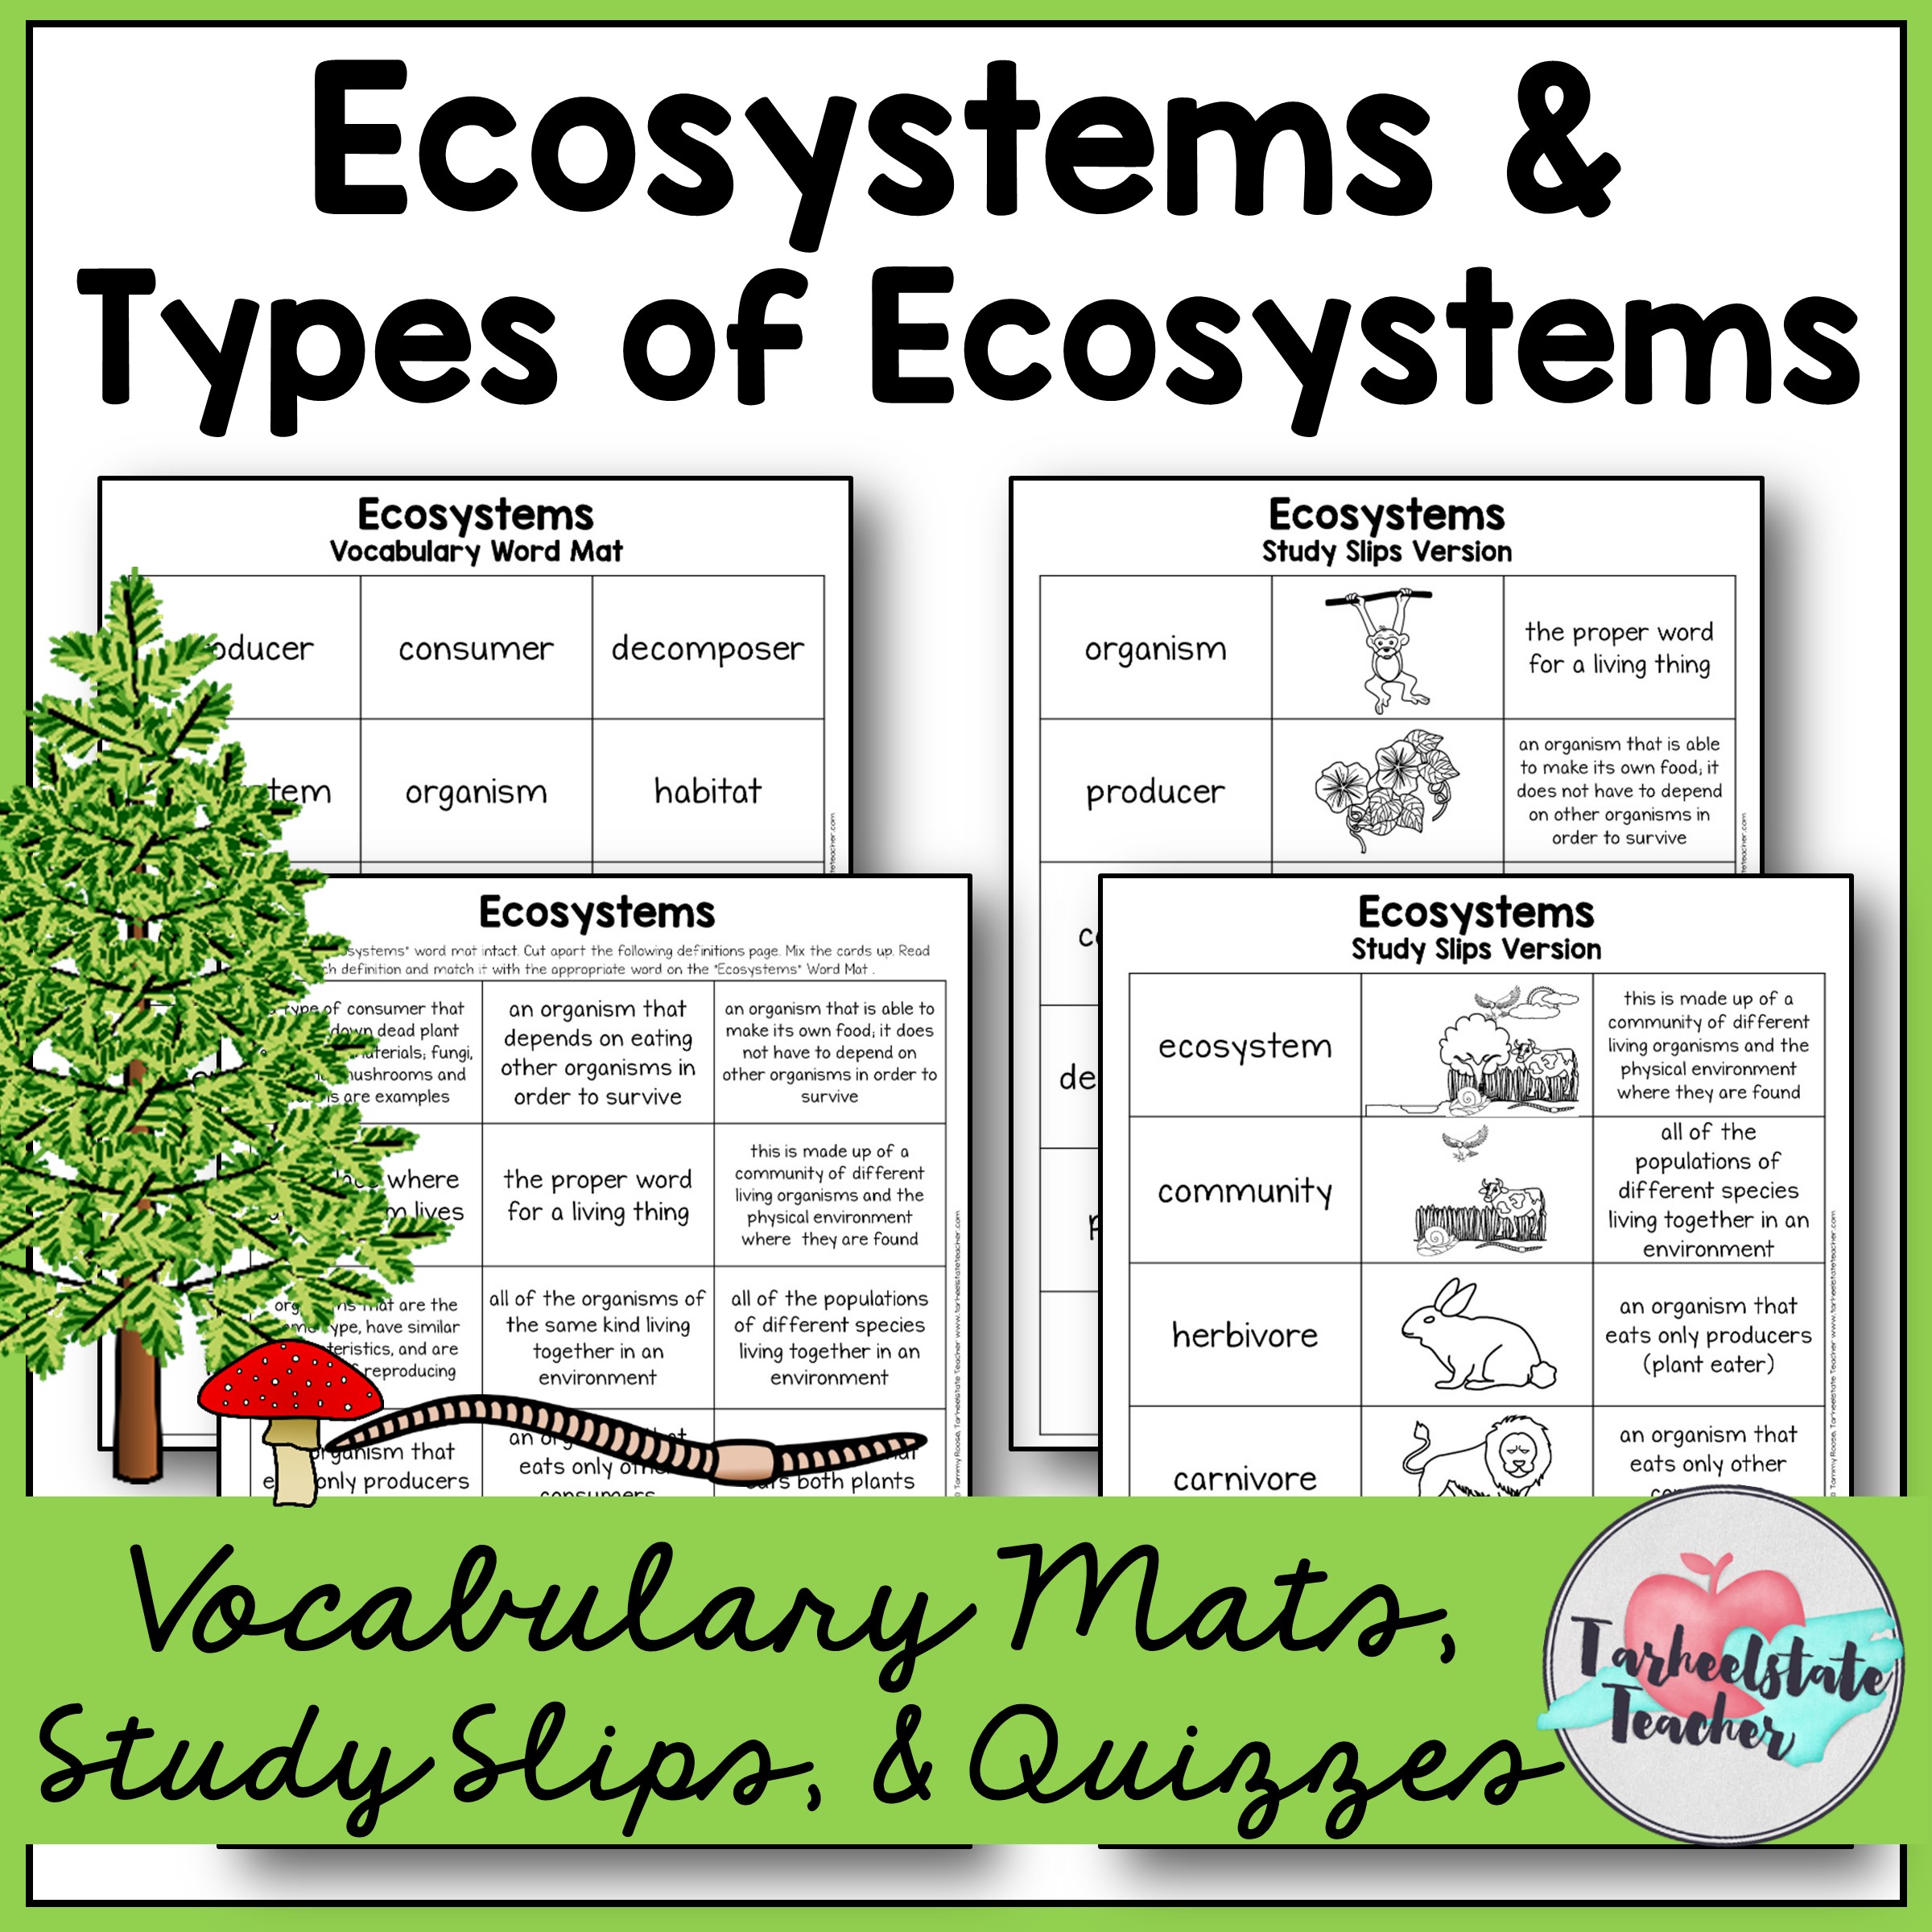 Ecosystems Vocabulary Mats.JPG